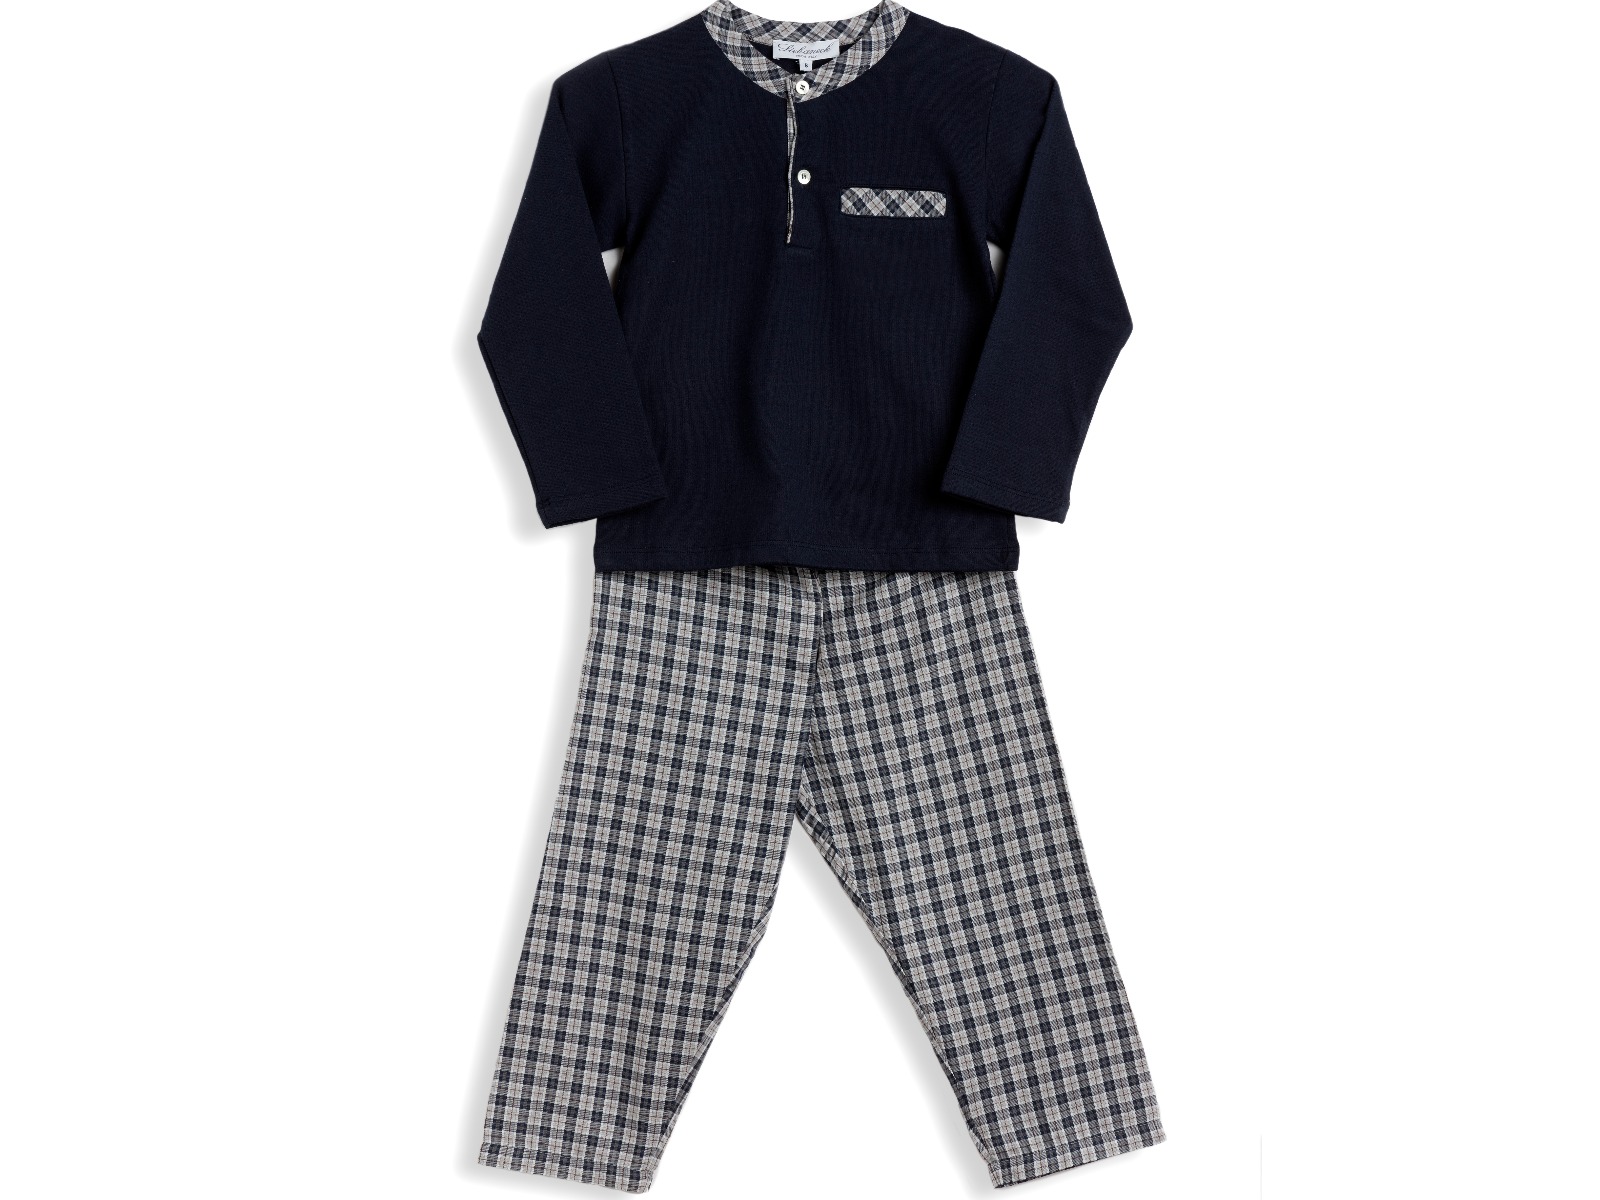 Siebaneck, i pigiami artigianali italiani: - bambino - mod. 109 Bimbo scozzese blu e grigio